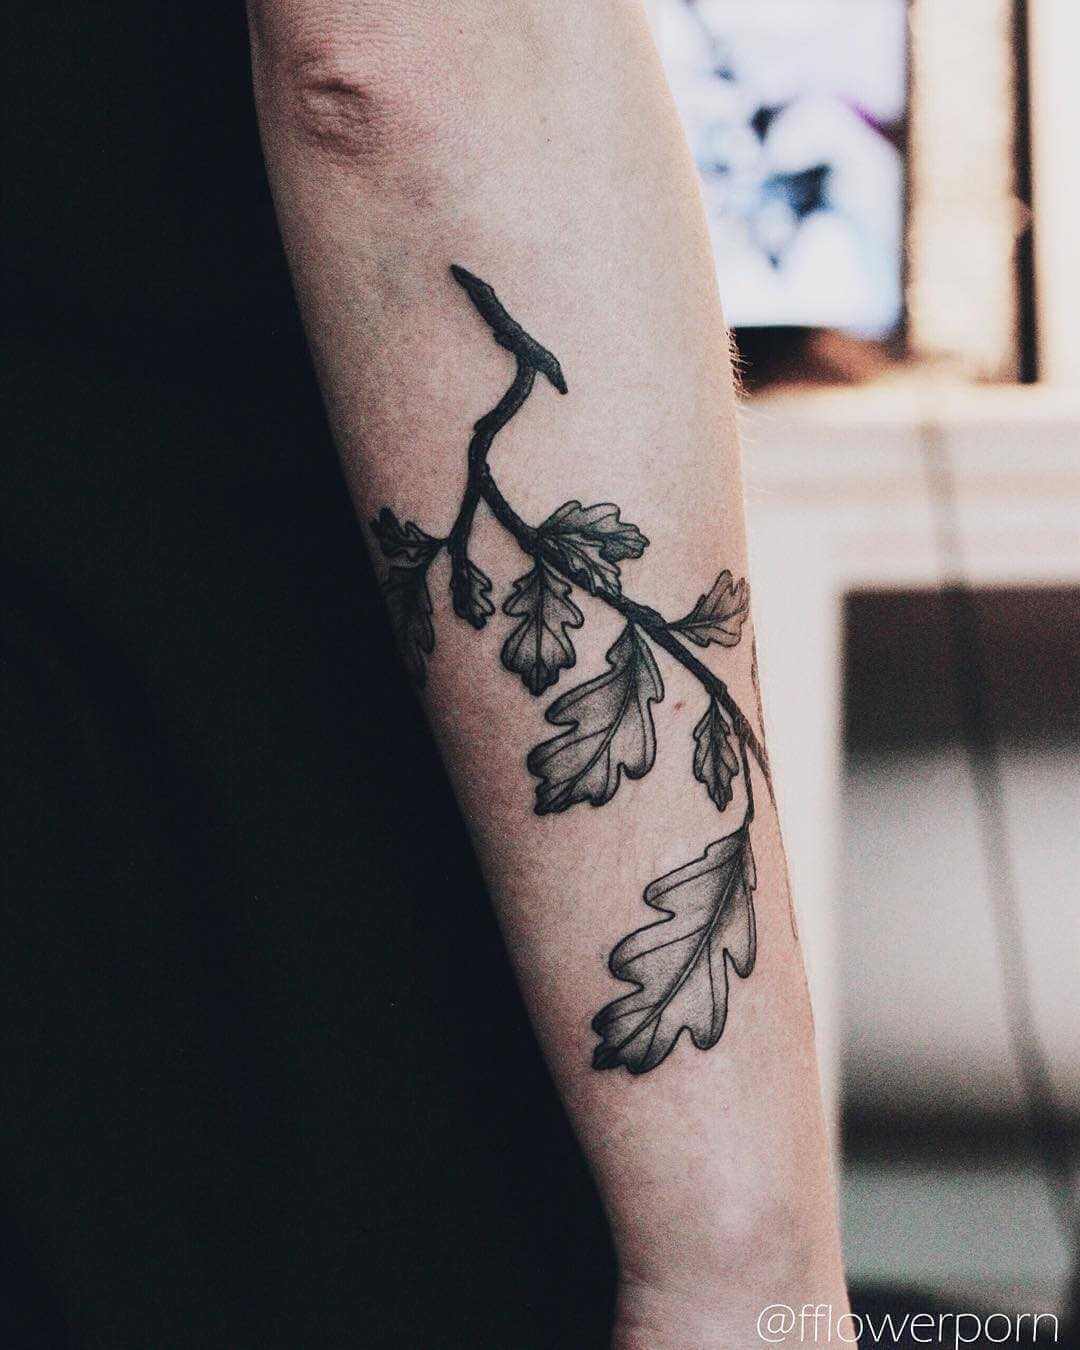 Oak branch tattoo